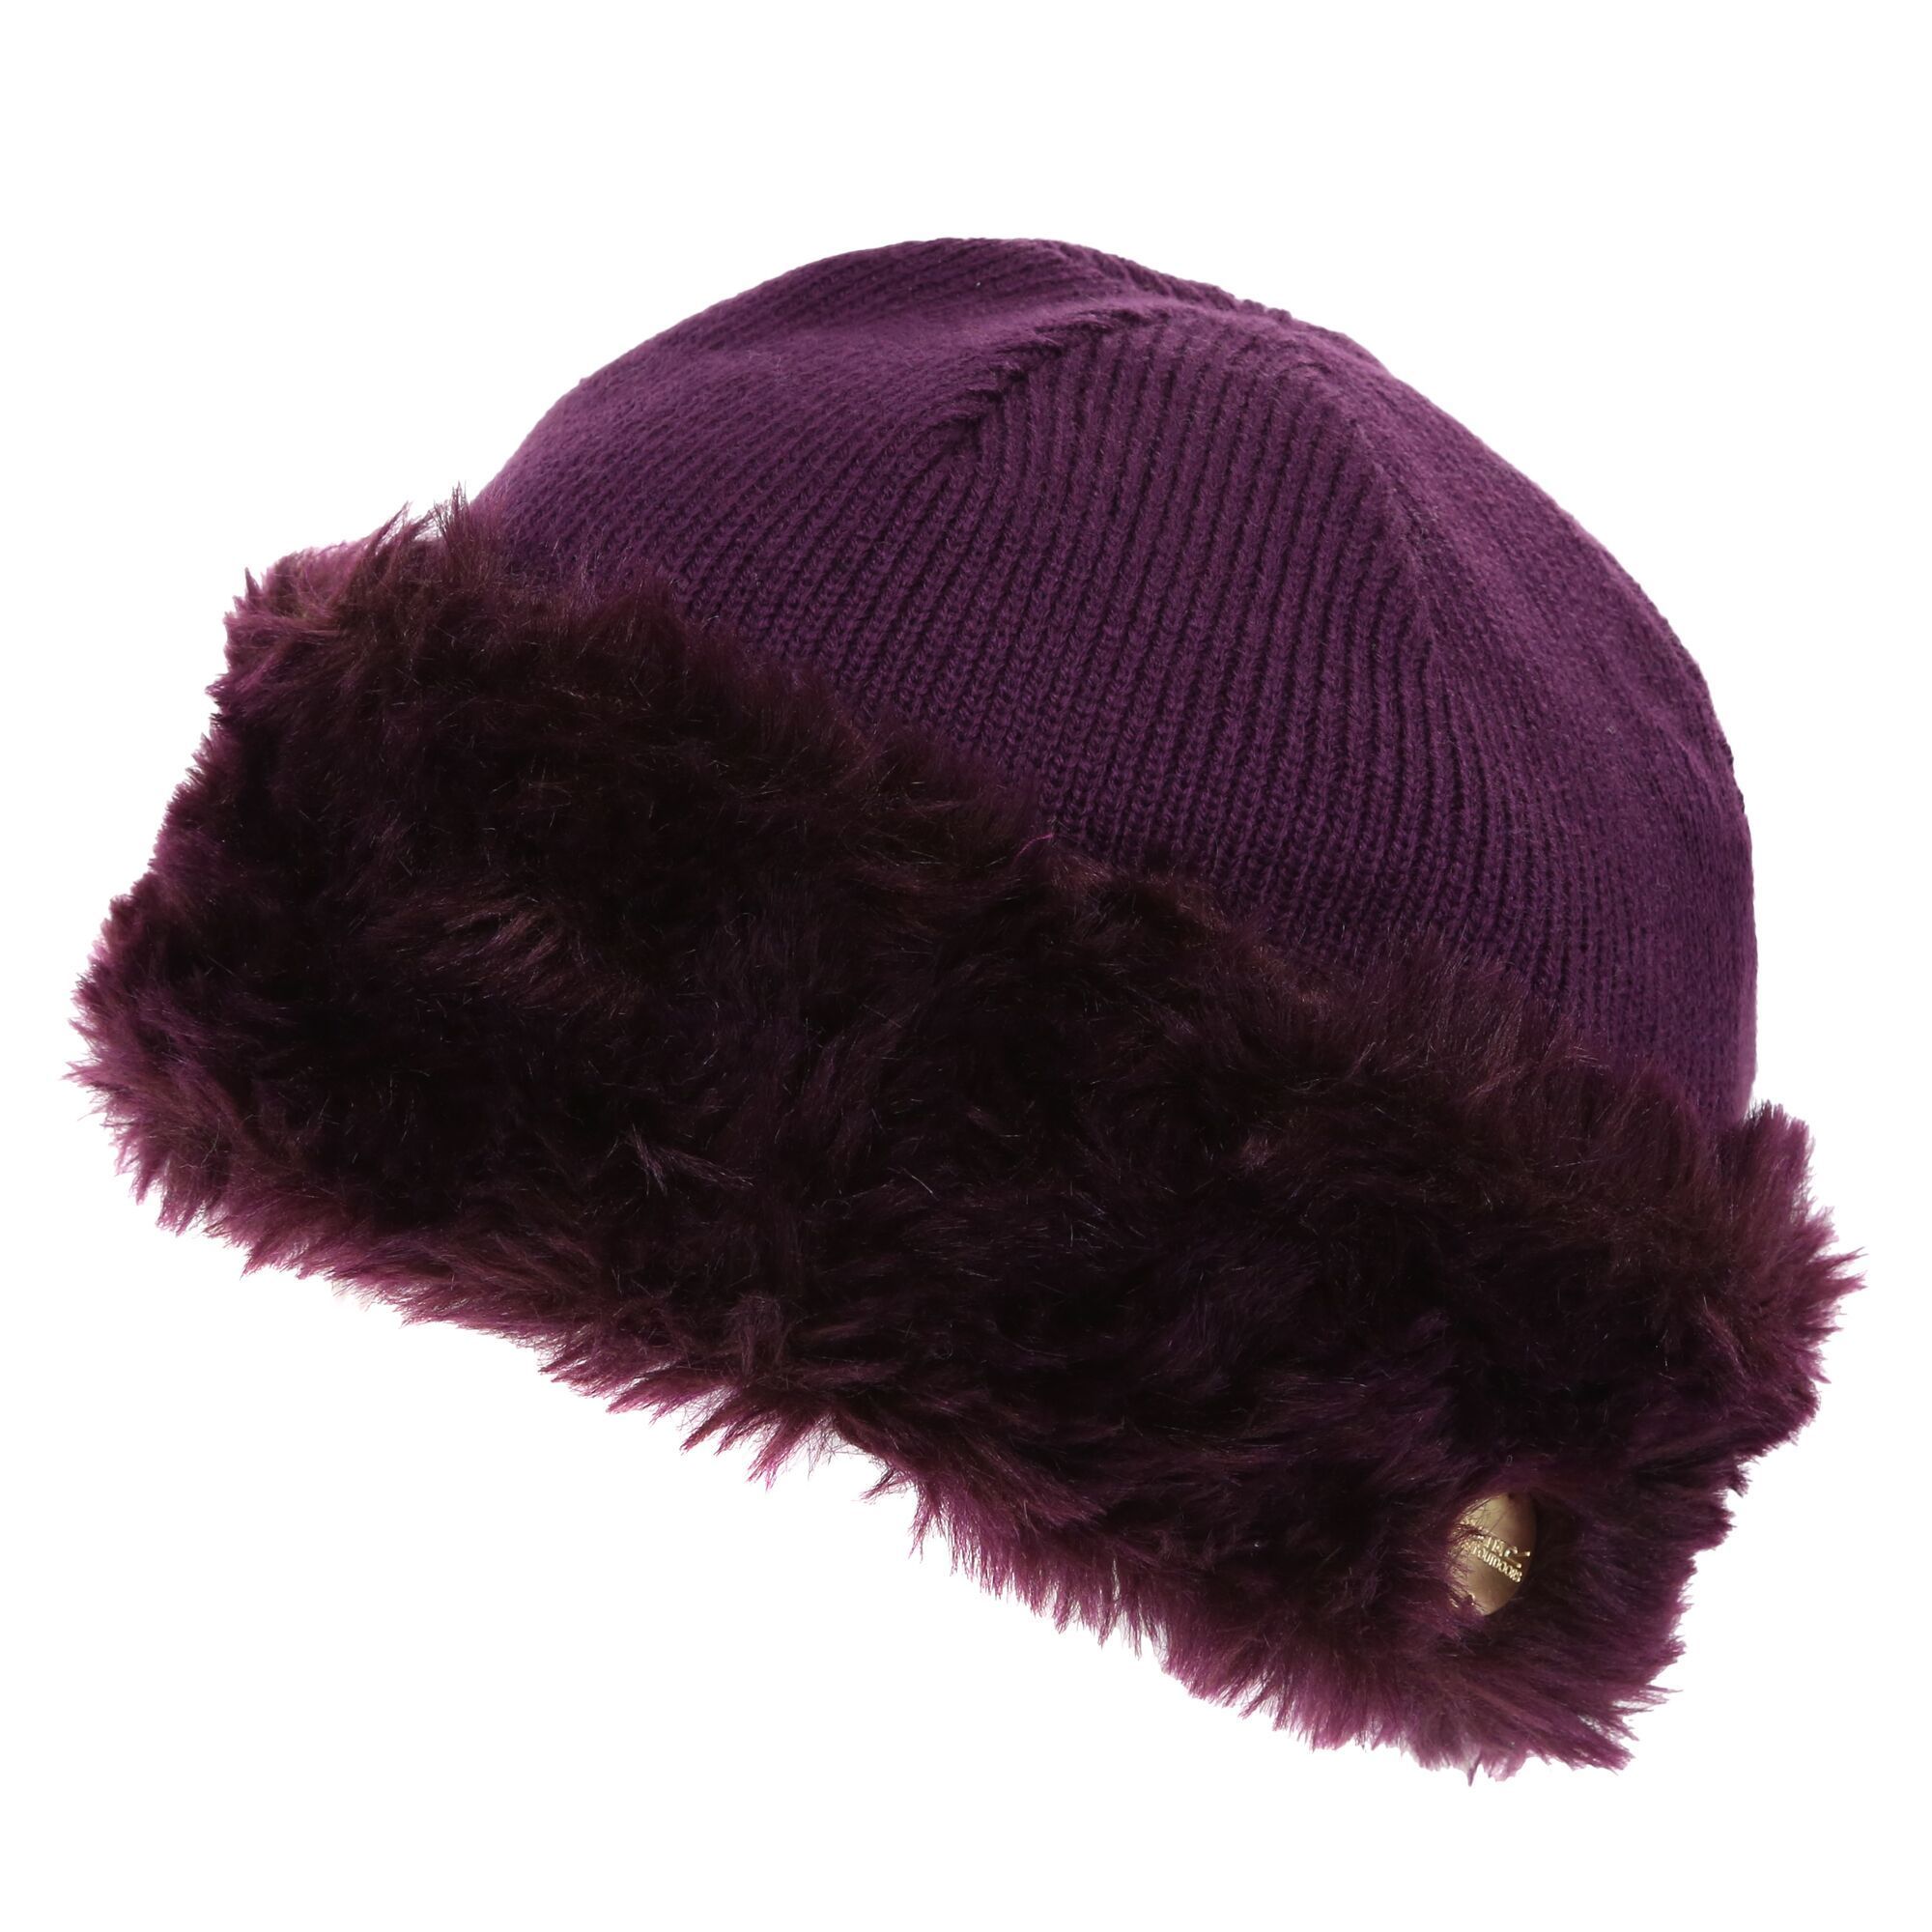 Womens winter beanie hat. 100% Cotton jersey knit. Faux fur trim.